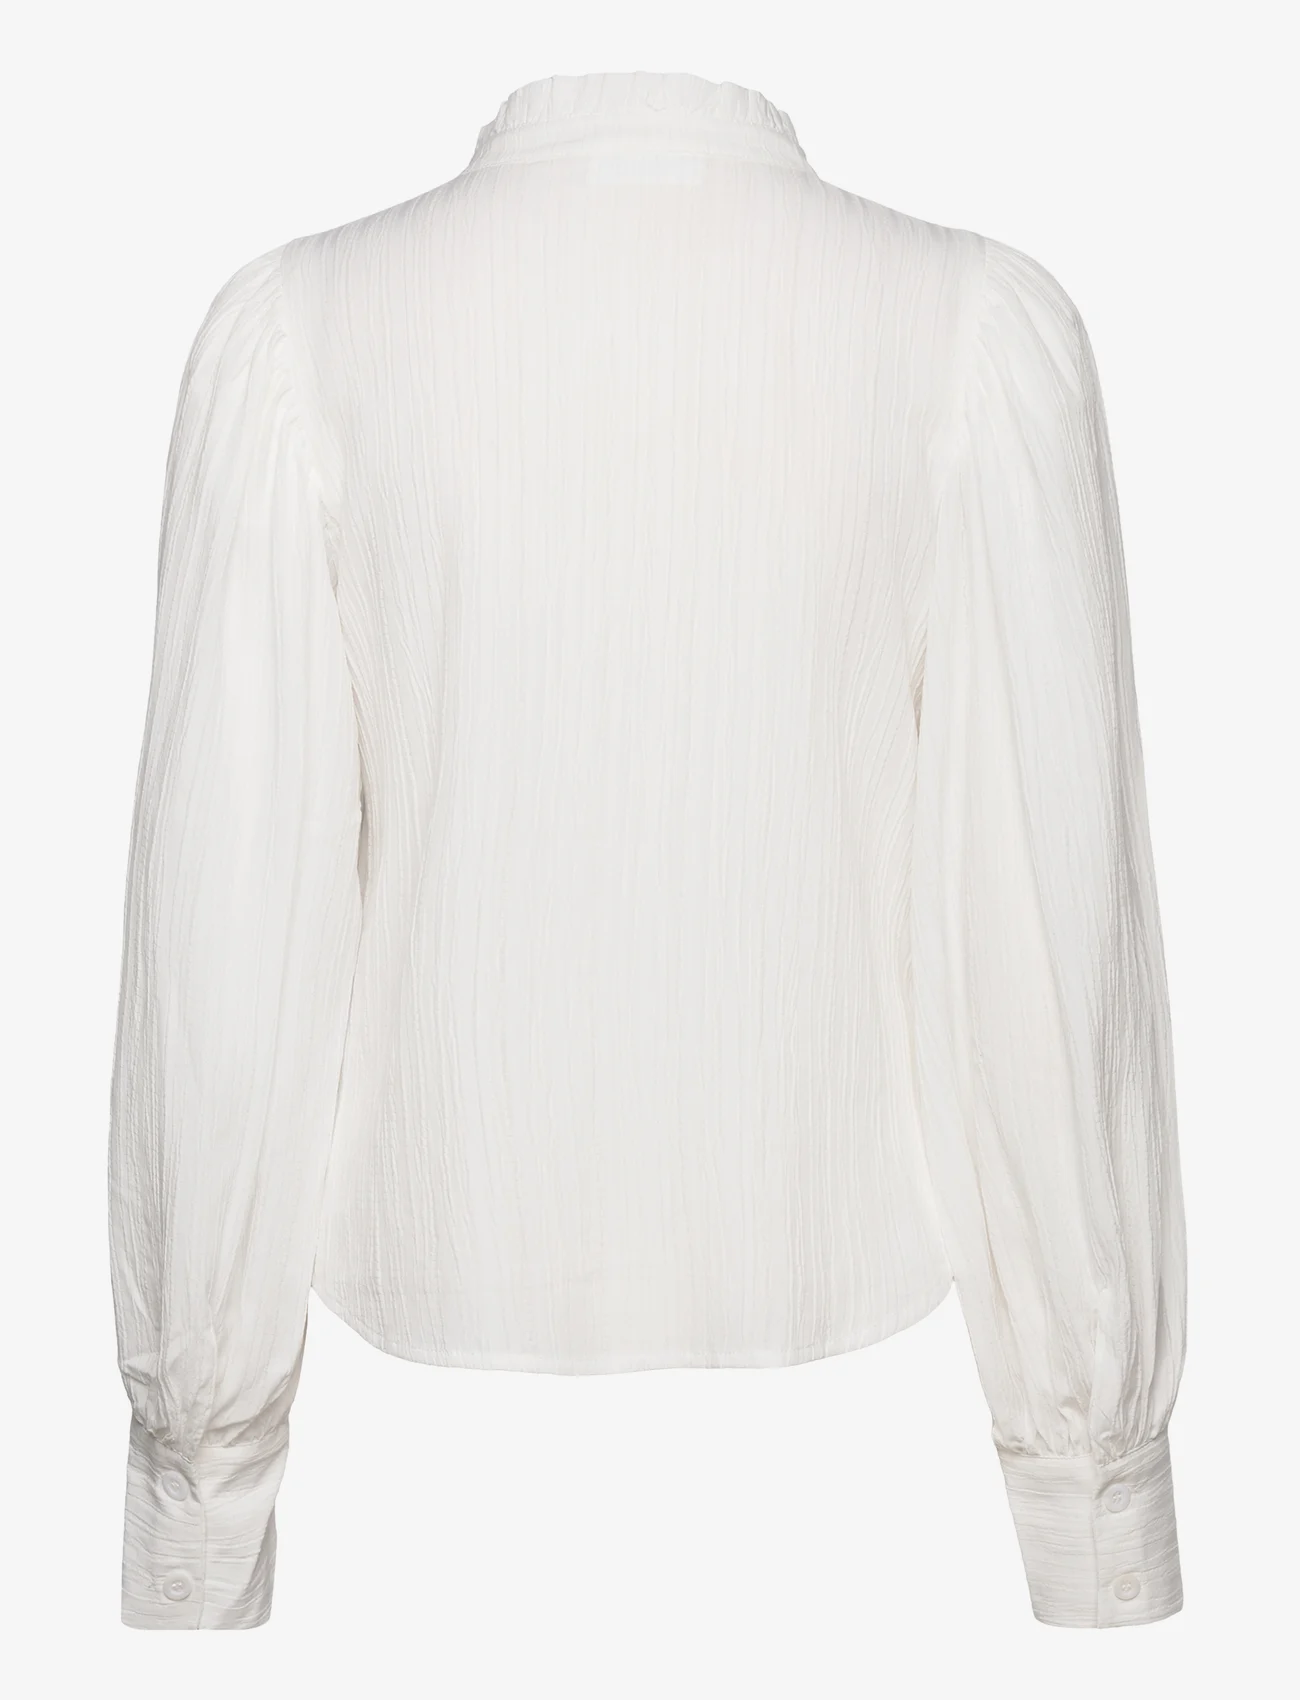 Karen By Simonsen - FrostyKB Frill Shirt - langärmlige hemden - bright white - 1